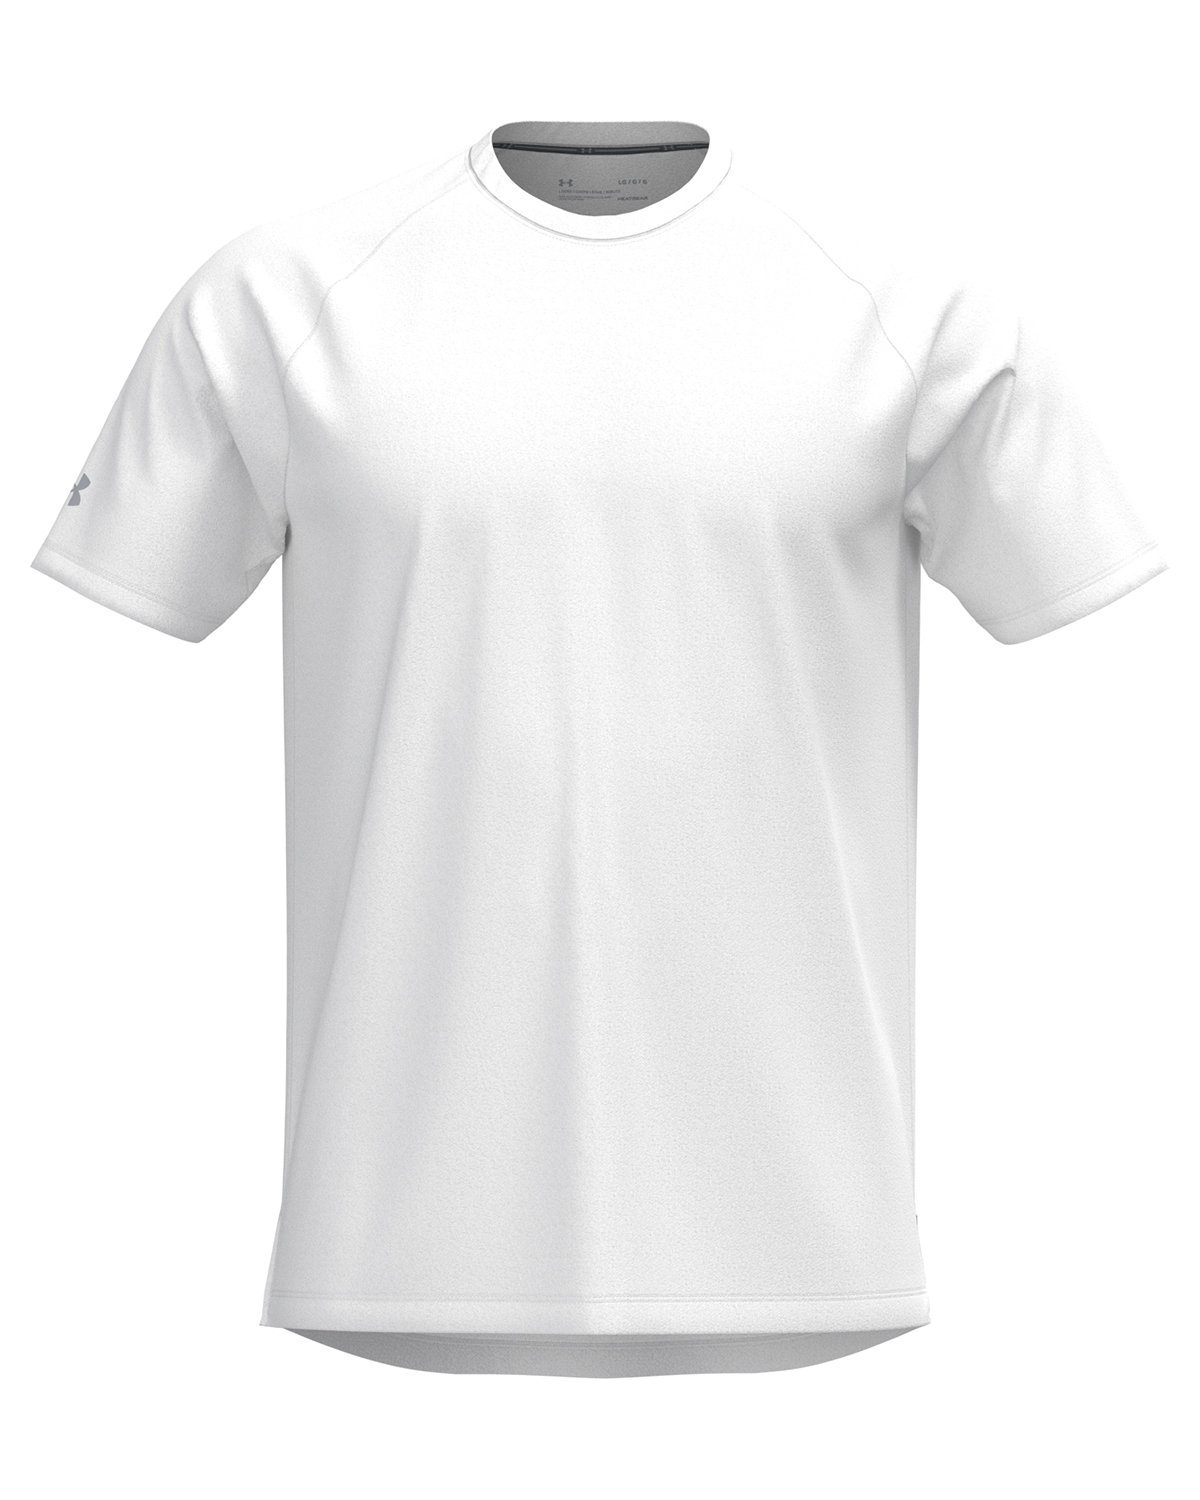 Under Armour 1383264 - Men's Athletic 2.0 Raglan T-Shirt